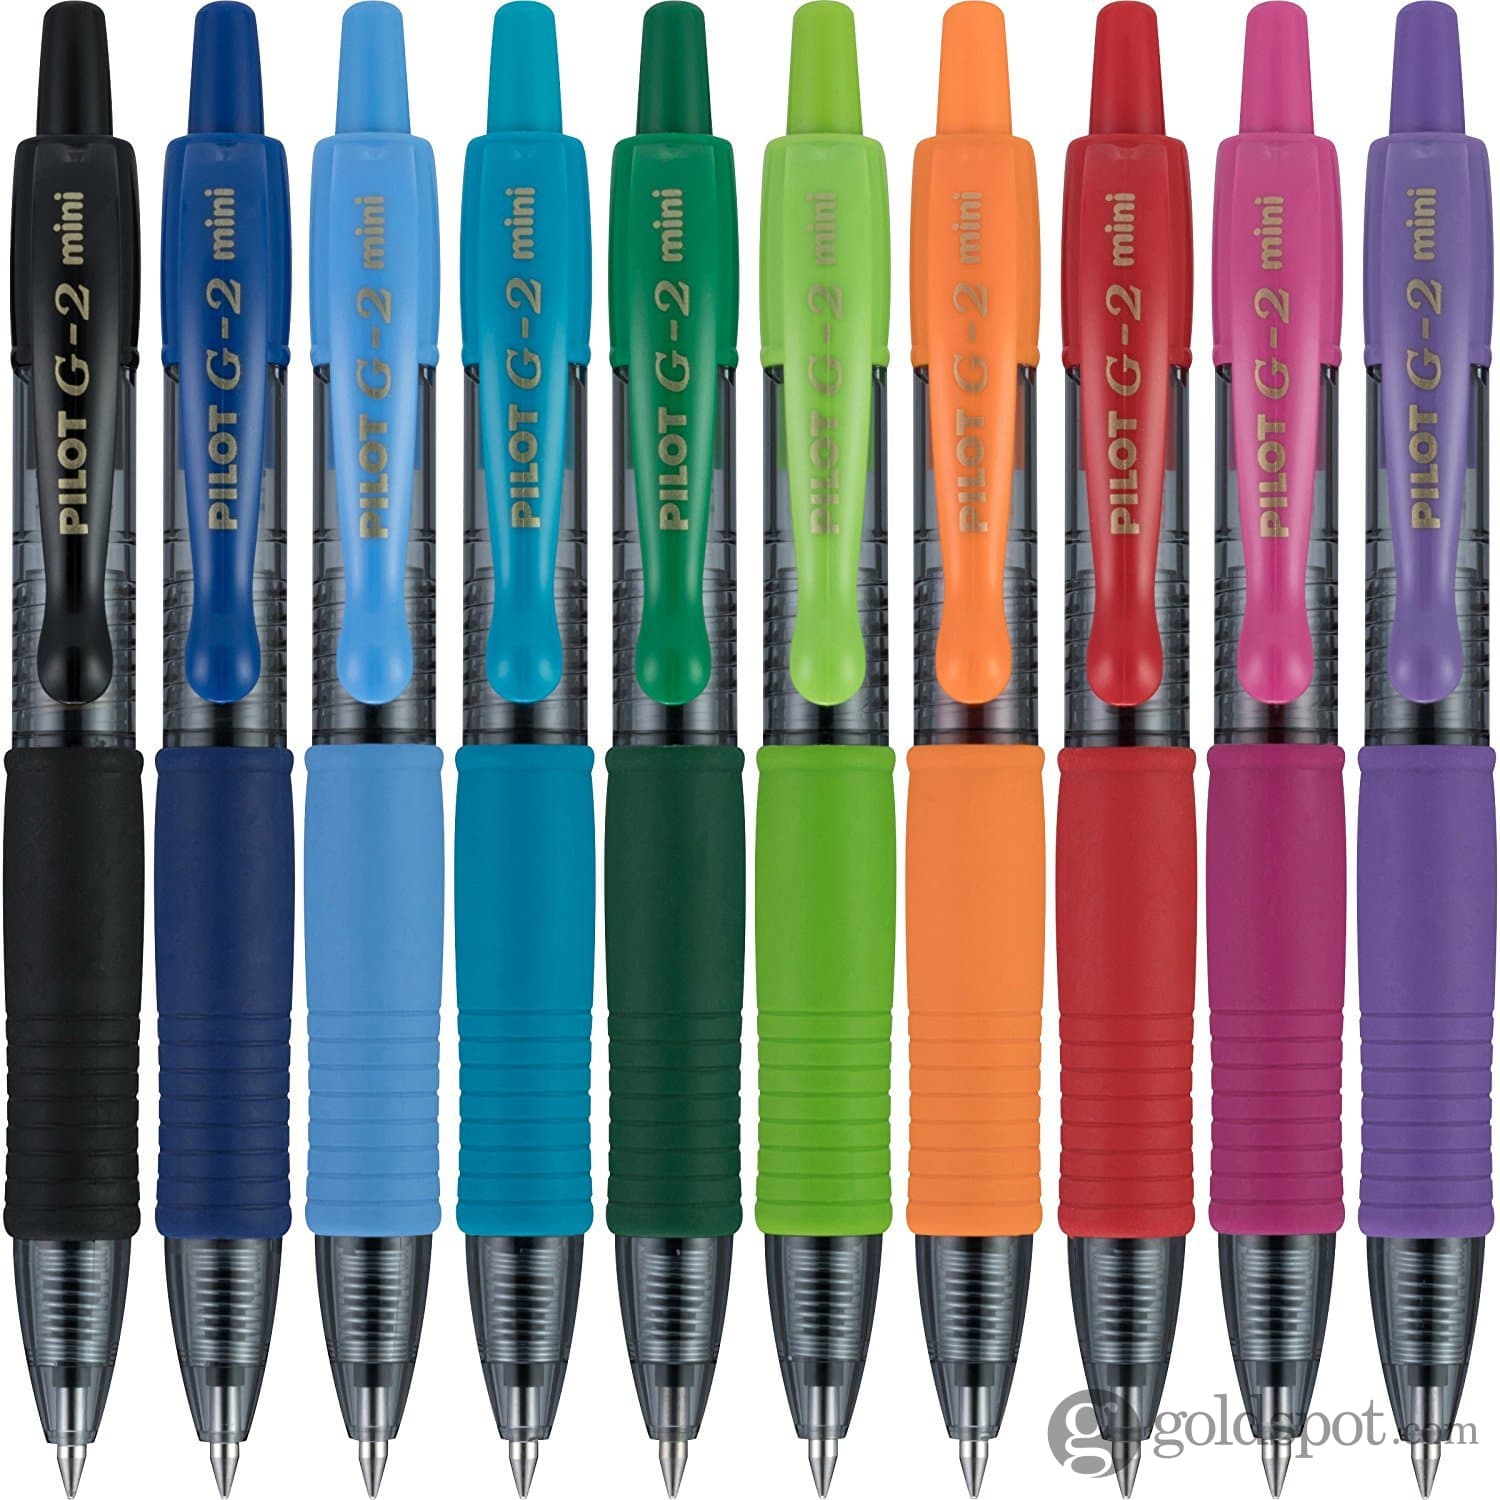 PILOT G2 MINI 10-PACK ~ pack of 10 mini click pens in assorted colors